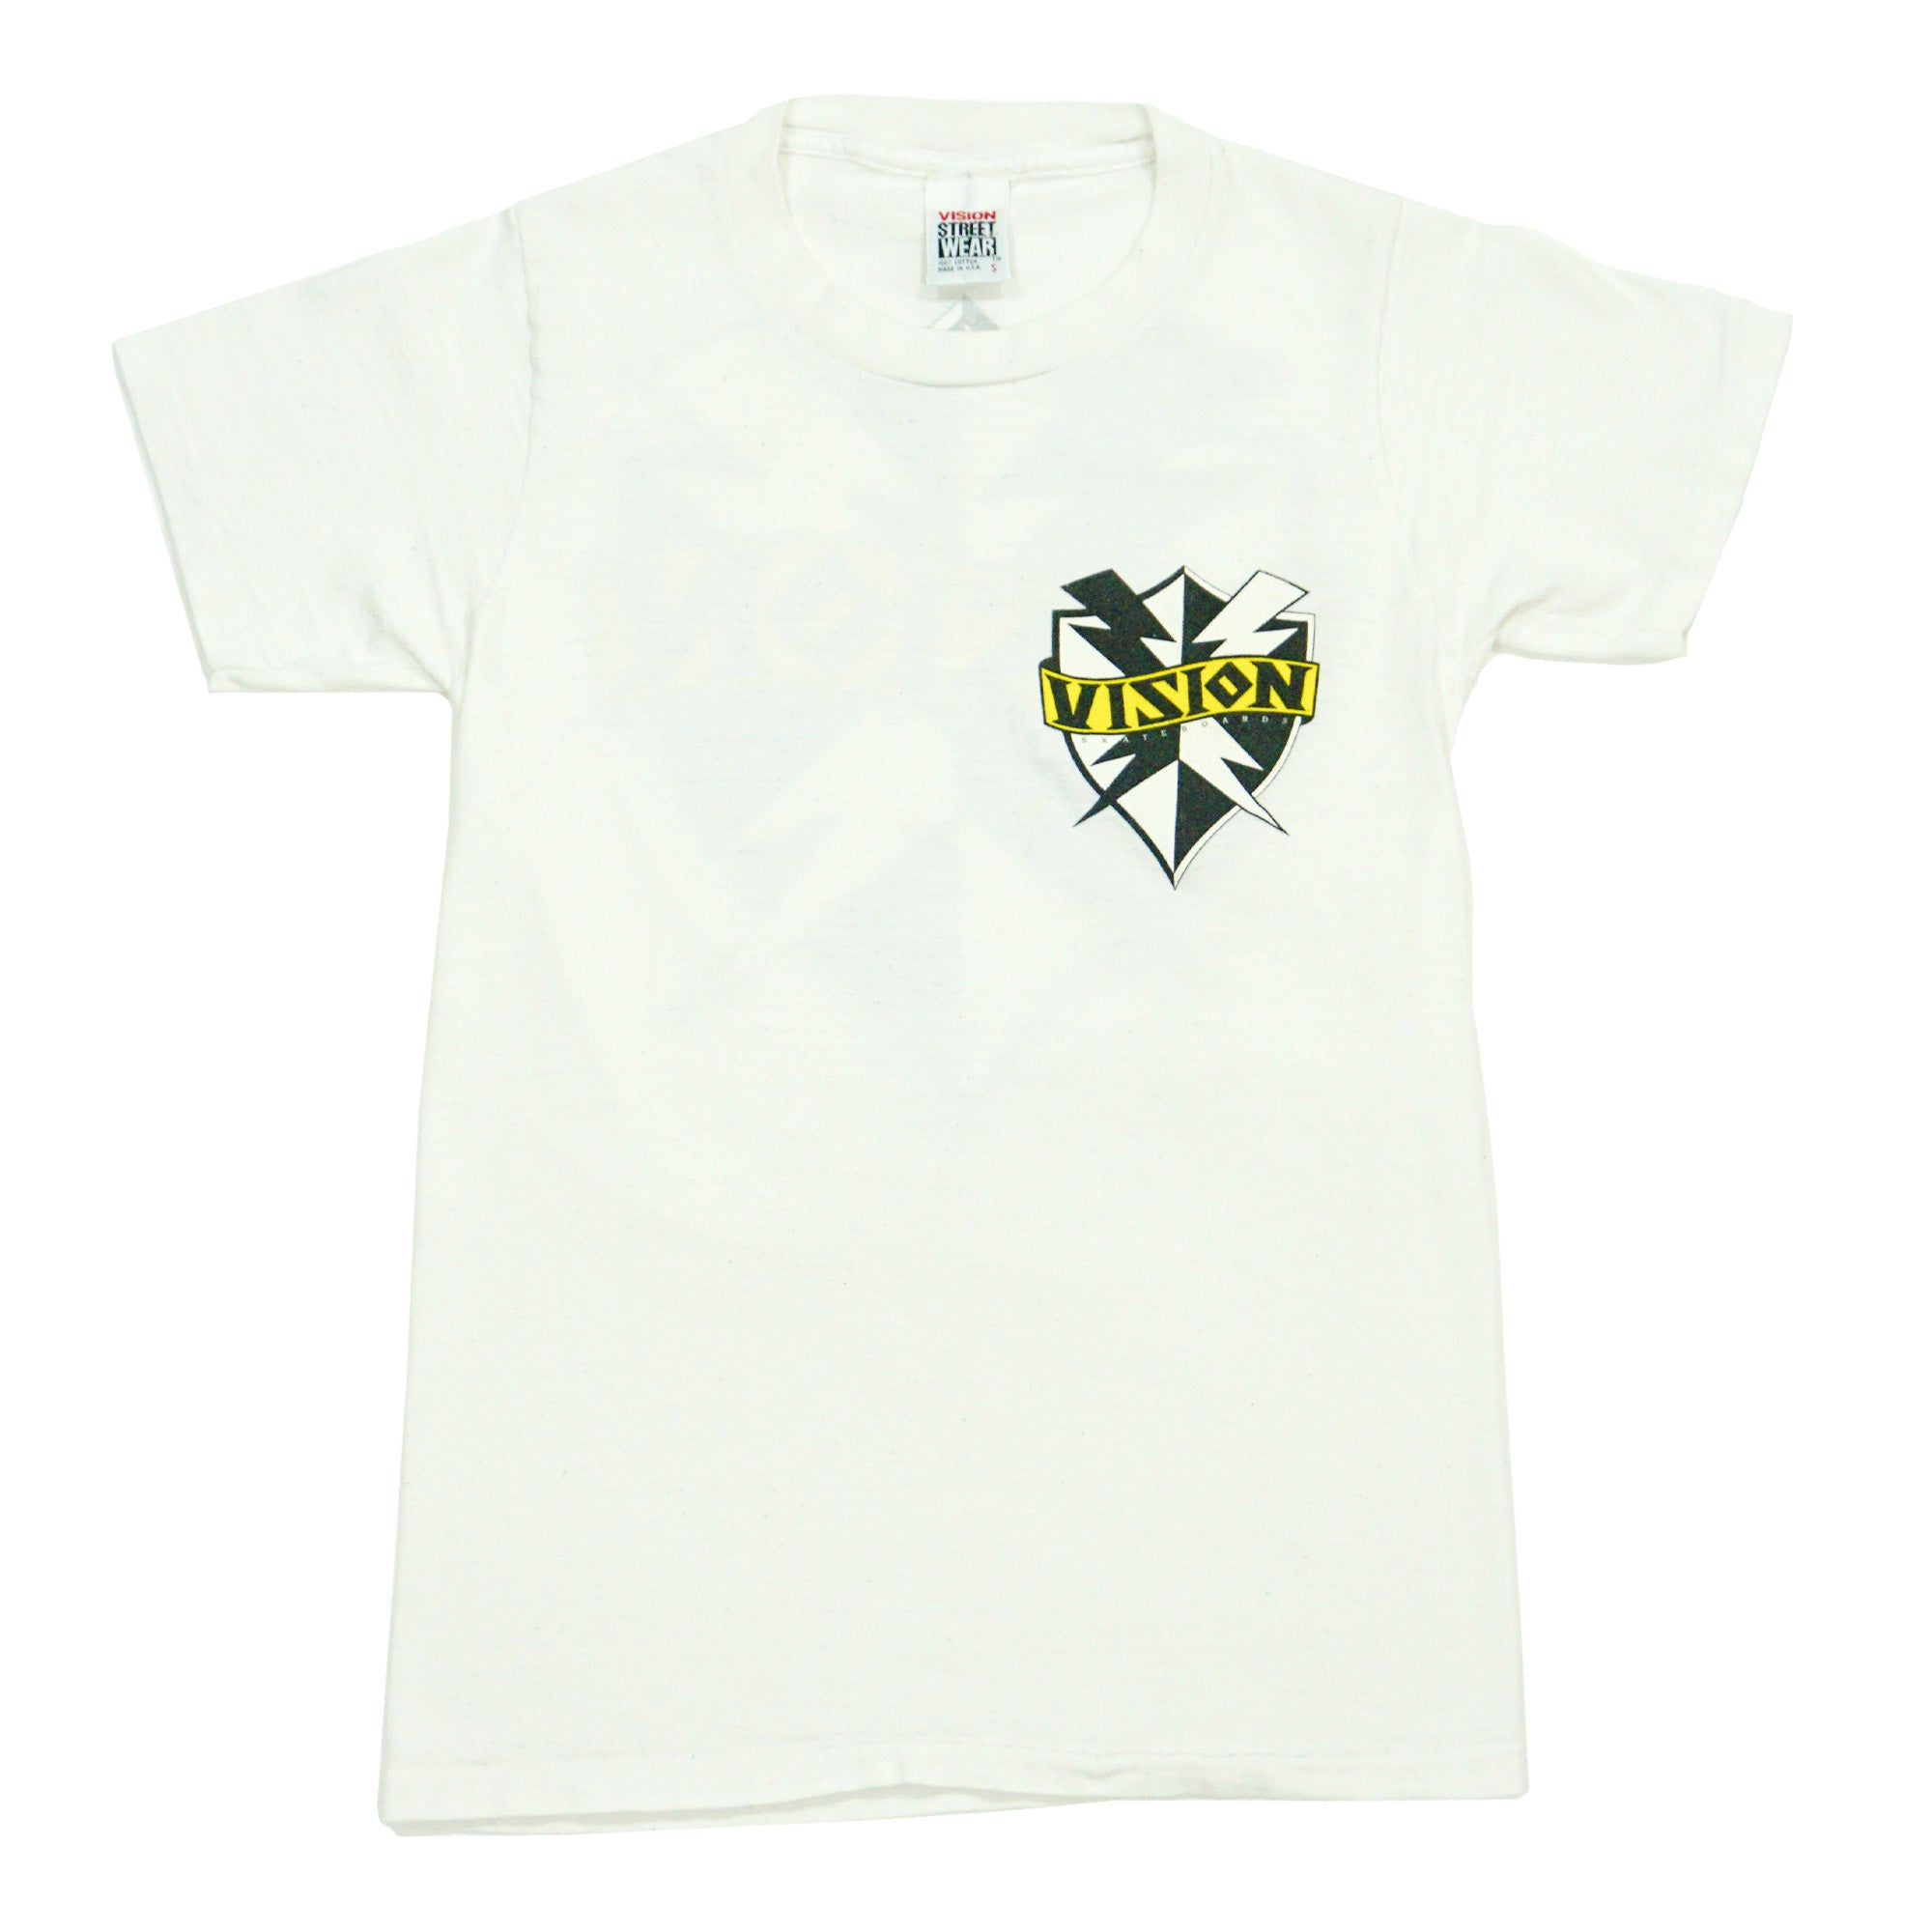 Vision Street Wear - Shield Shirt (S)